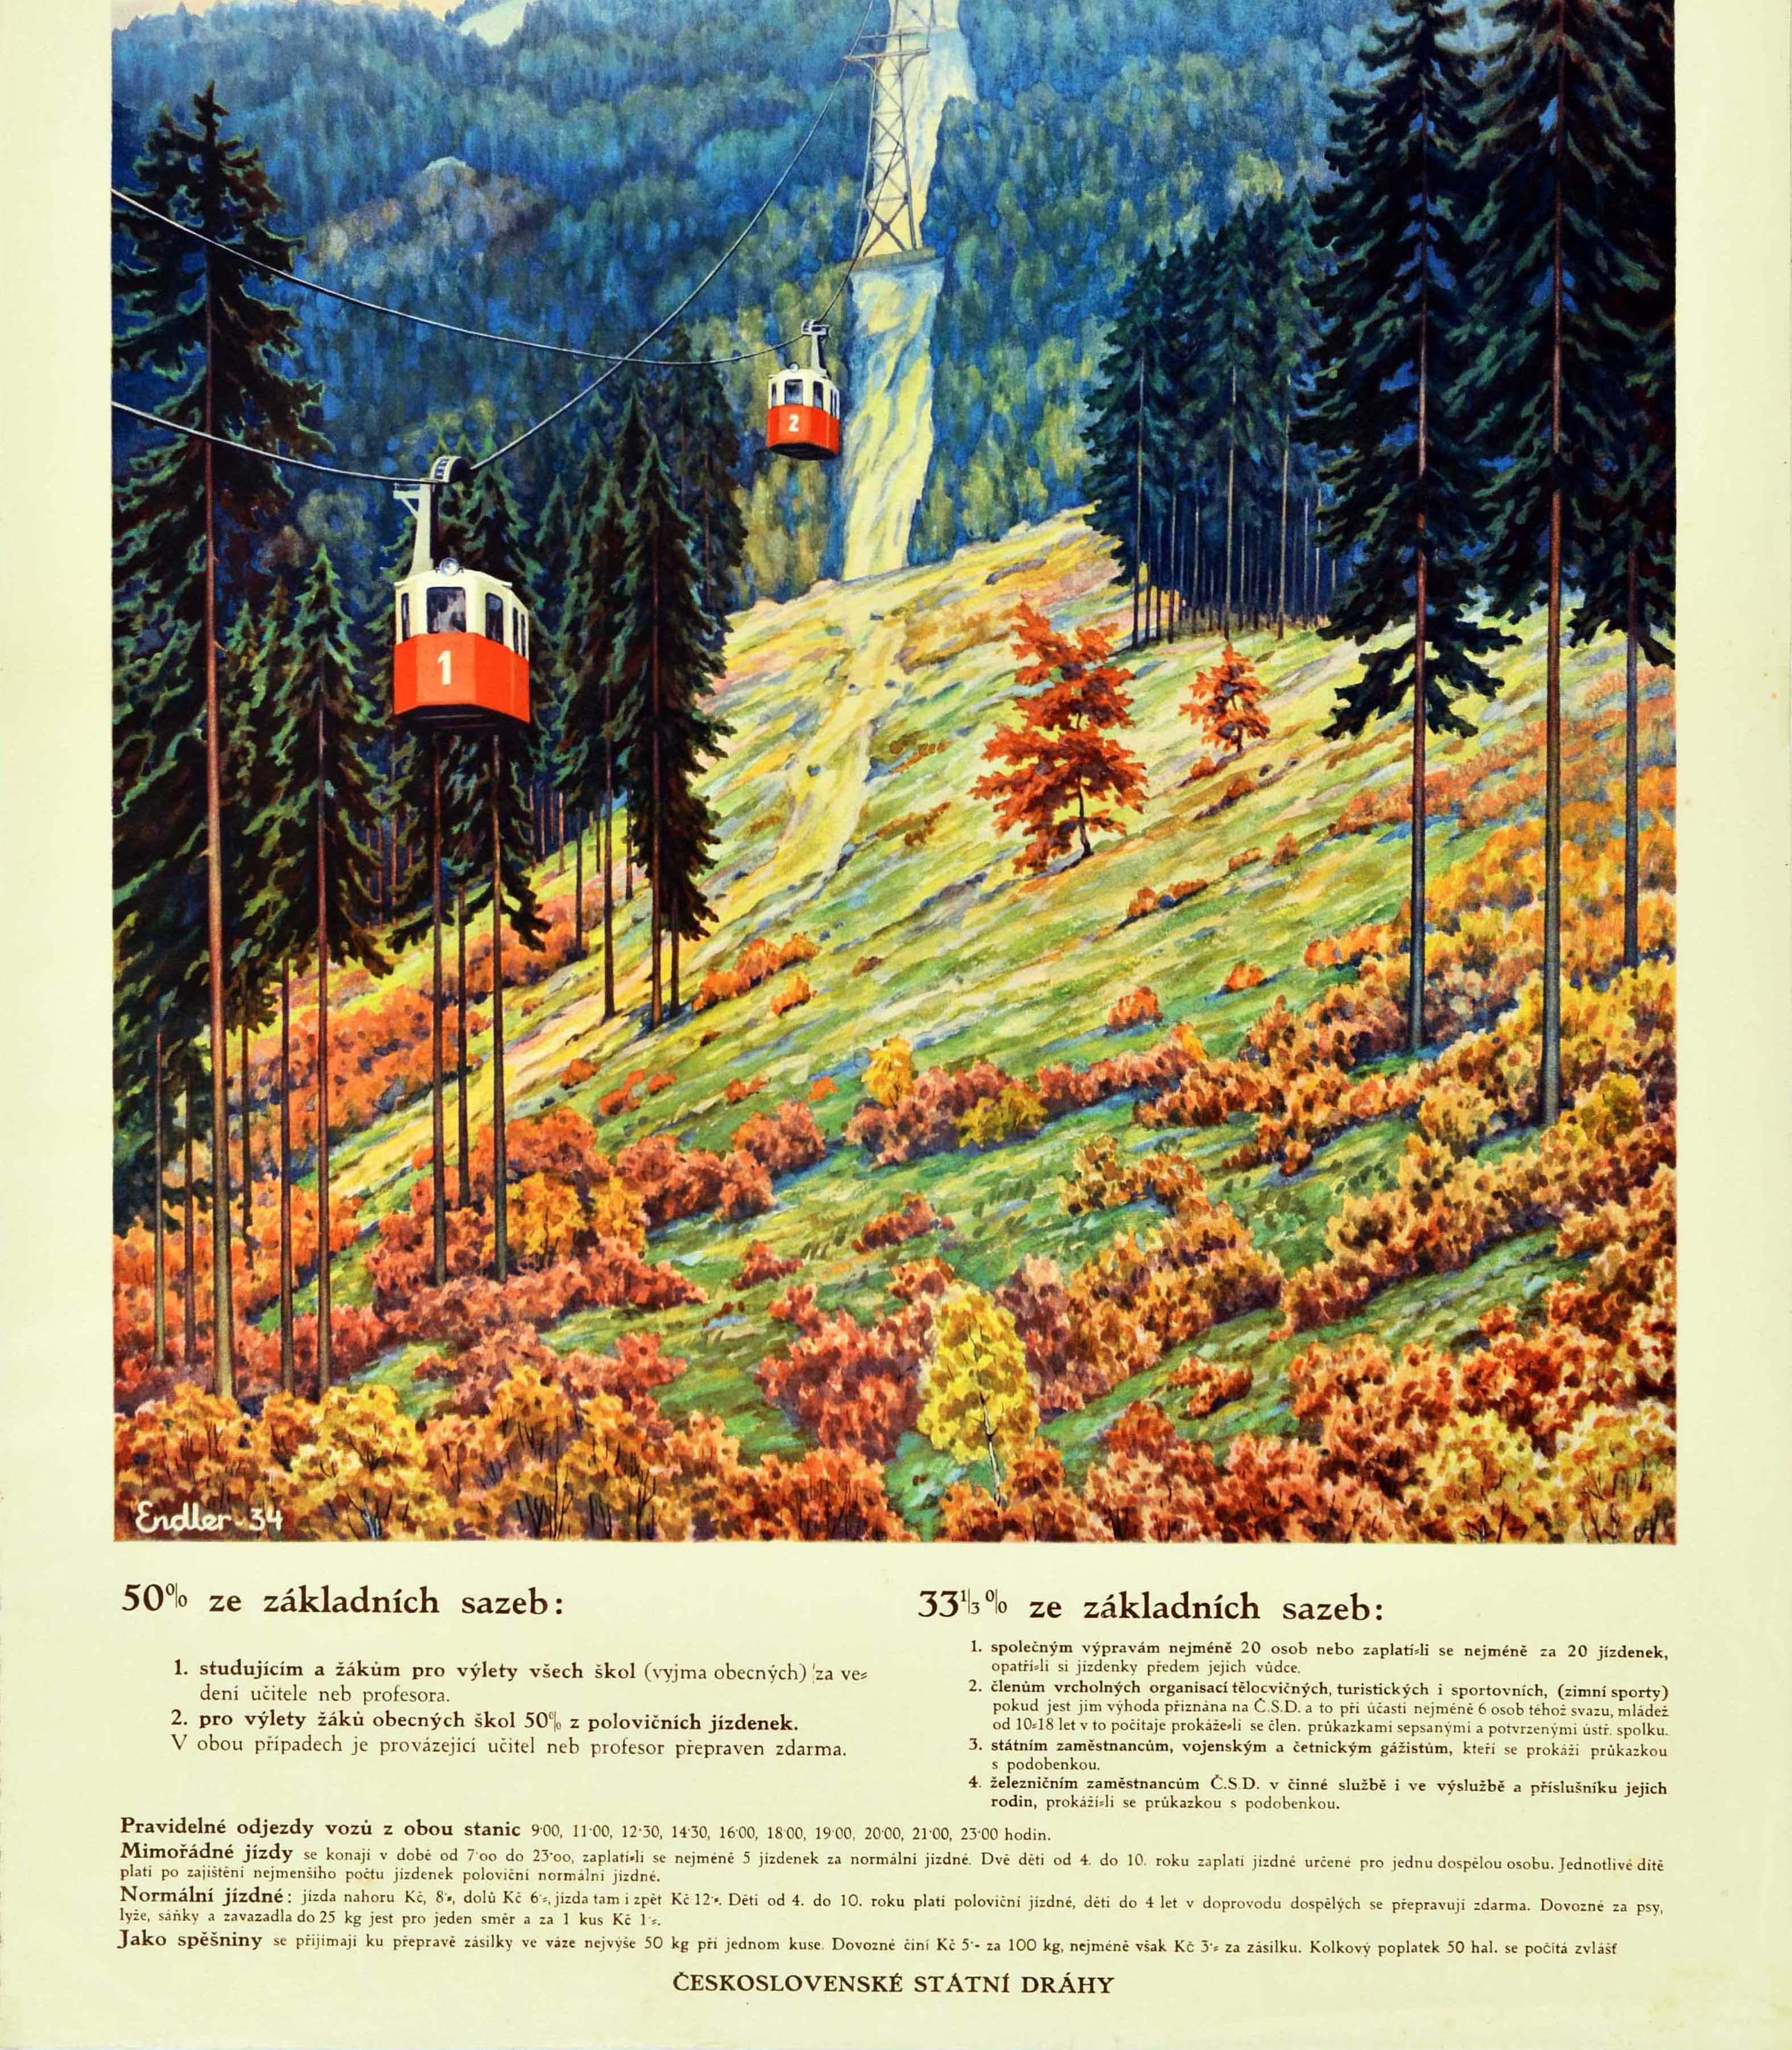 Mid-20th Century Original Vintage Travel Poster Advertising CSD Czechoslovak State Railways Czech For Sale